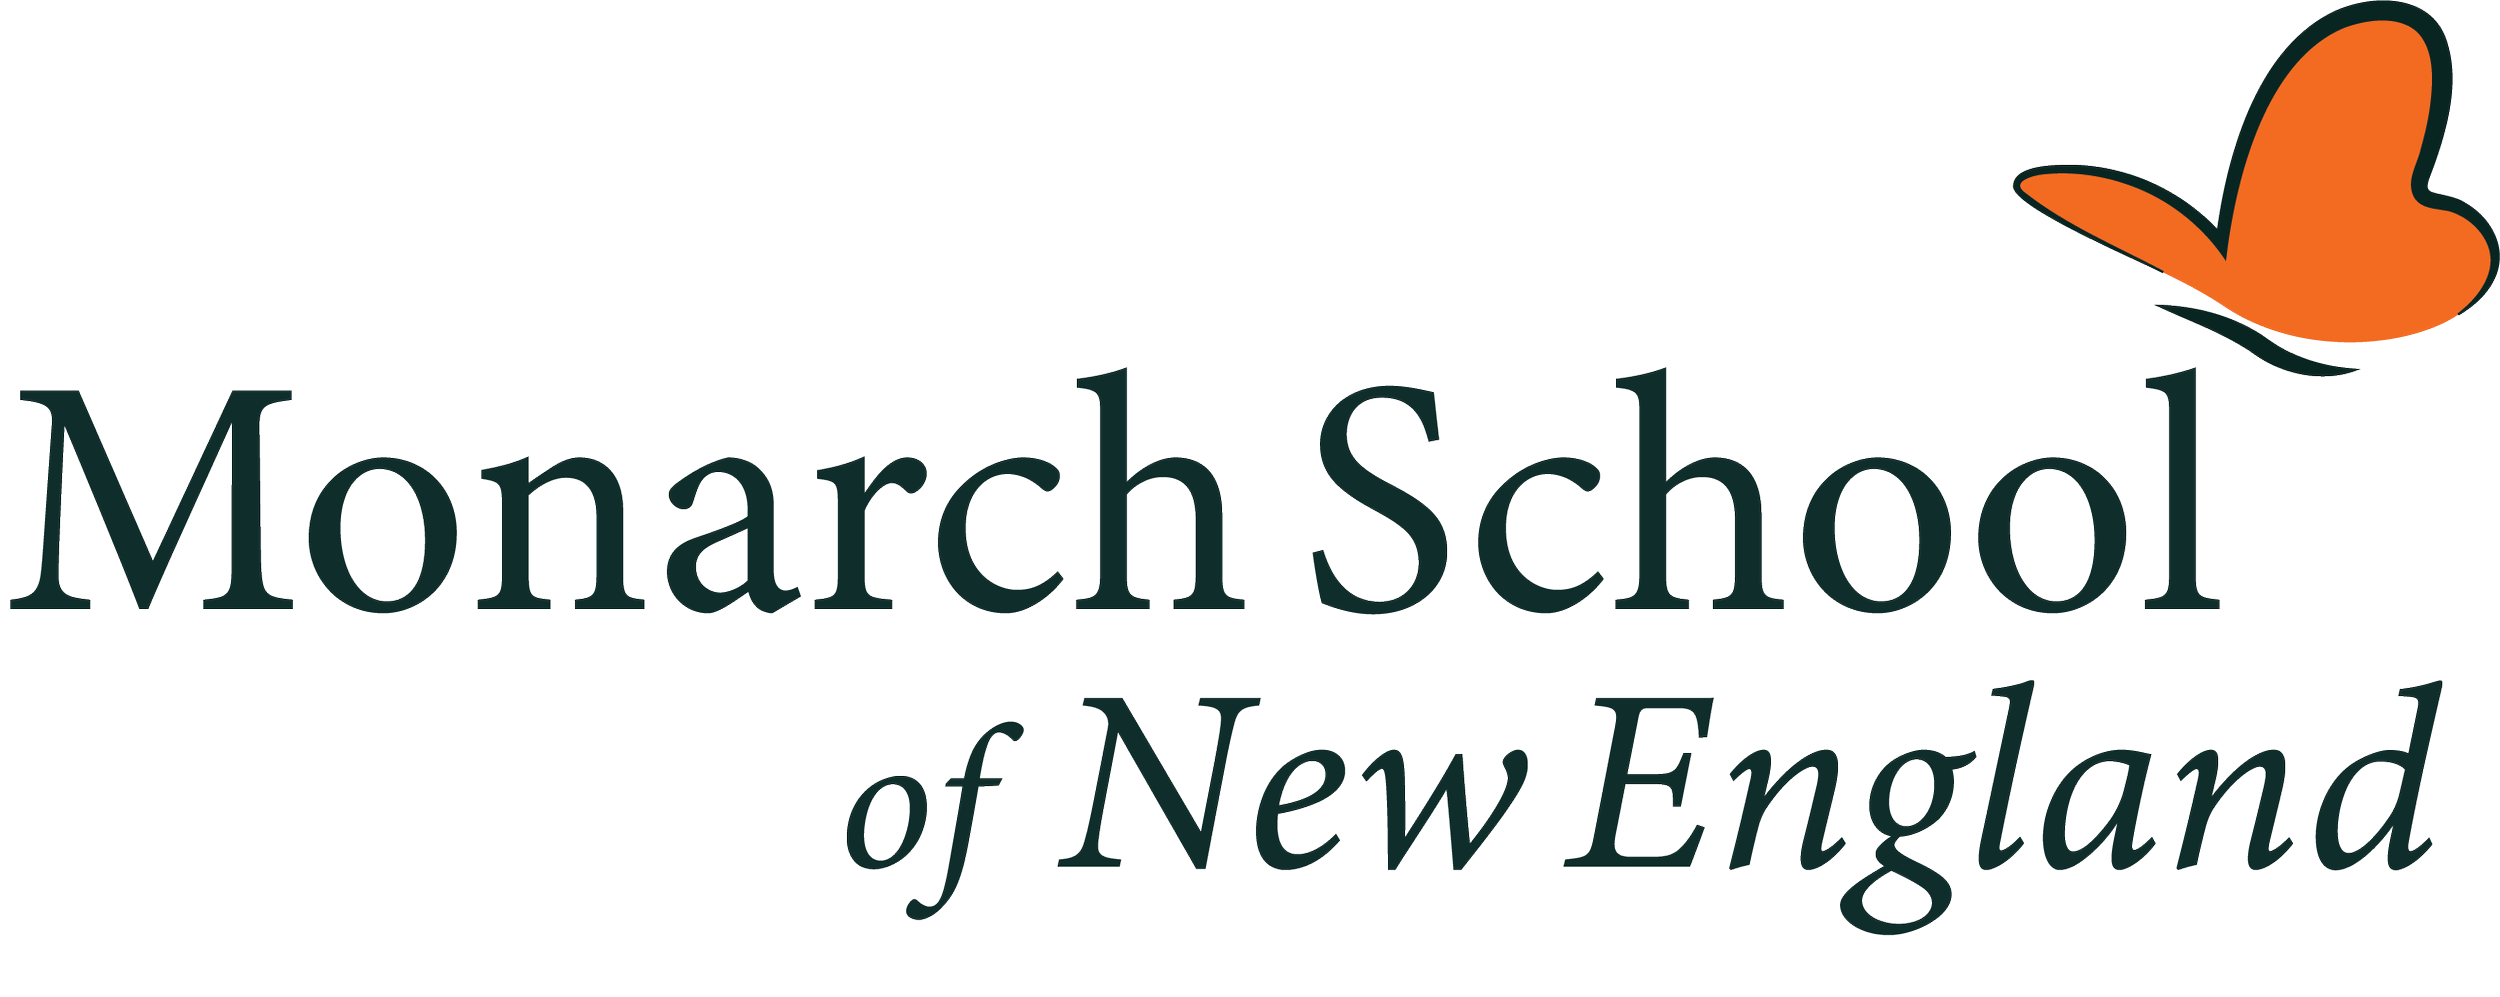 Monarch School Logo1 .png